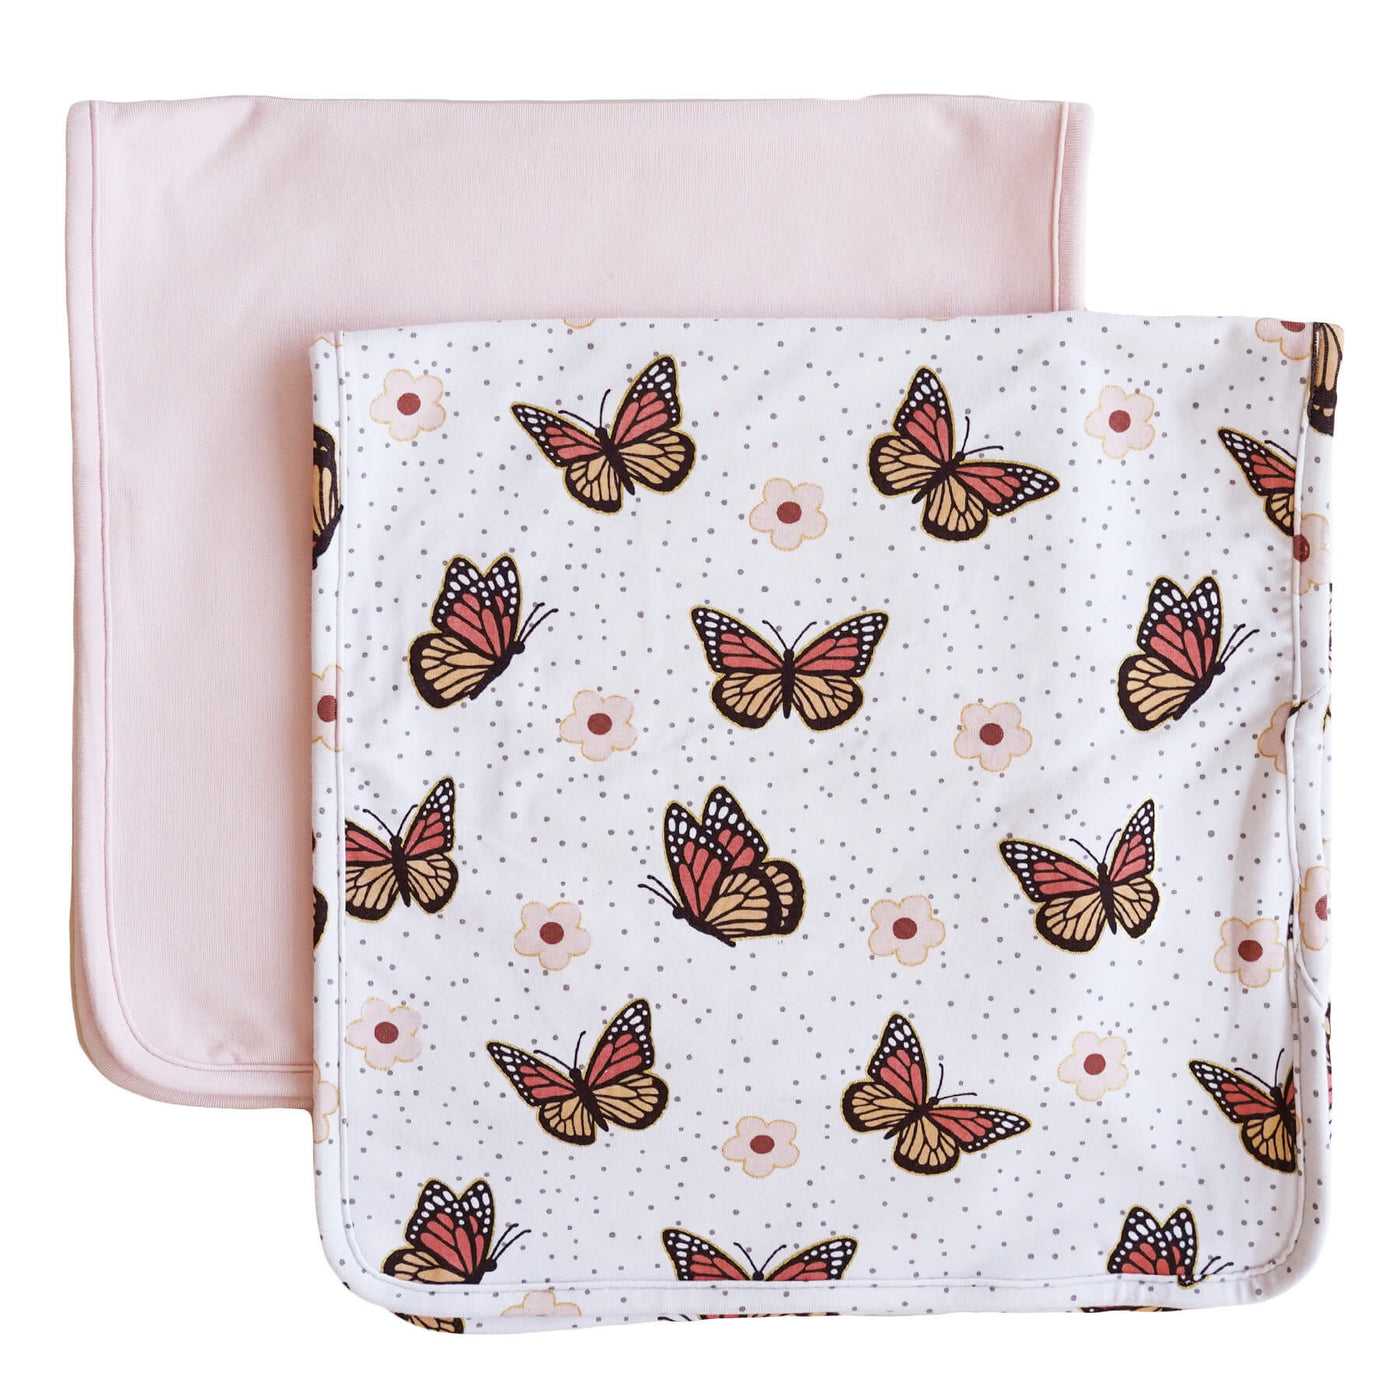 butterfly burp cloth set 